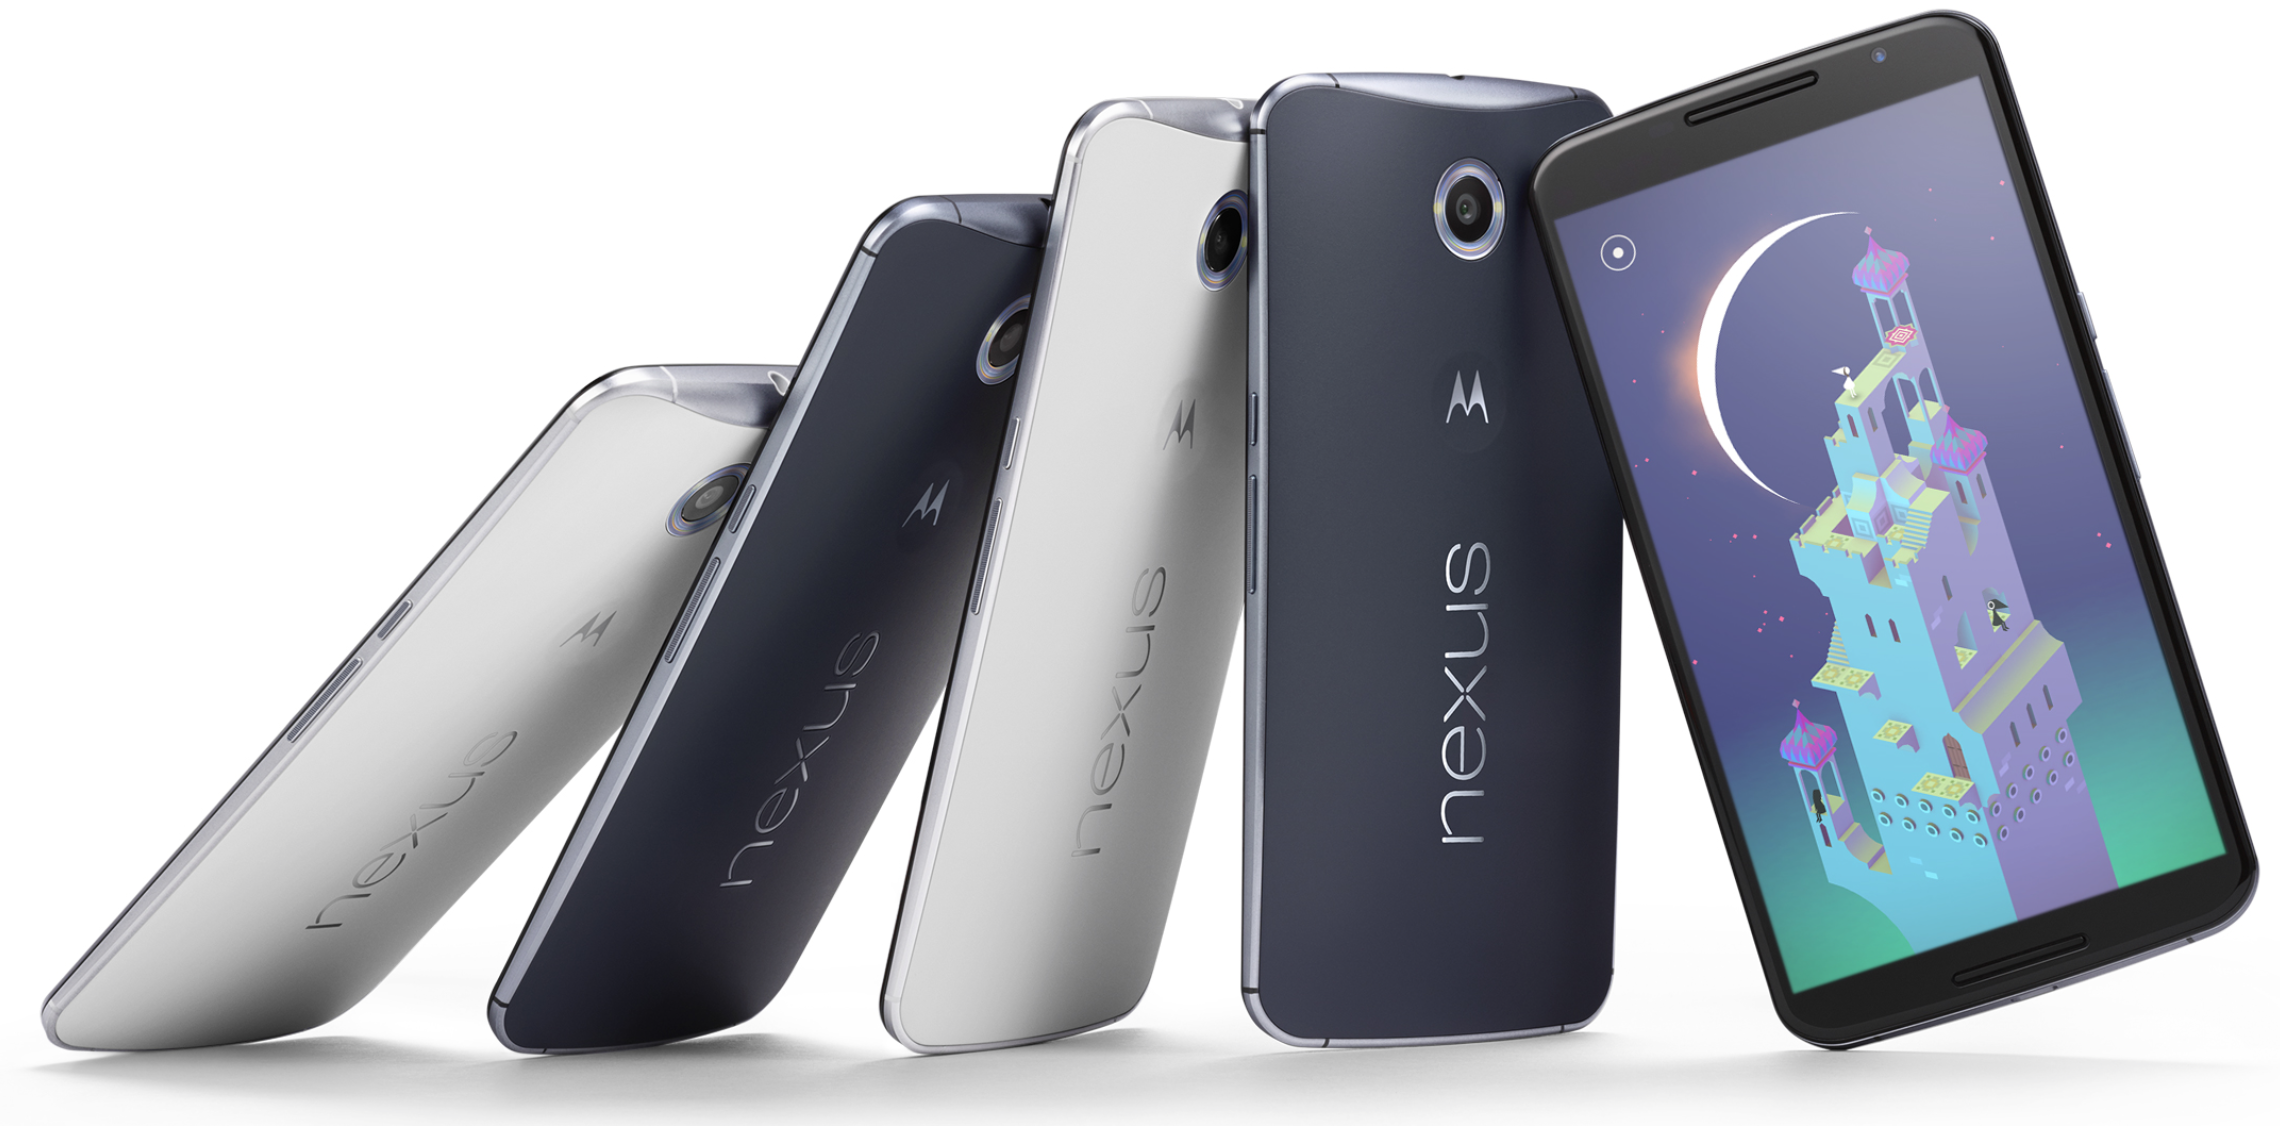  Google Nexus 6